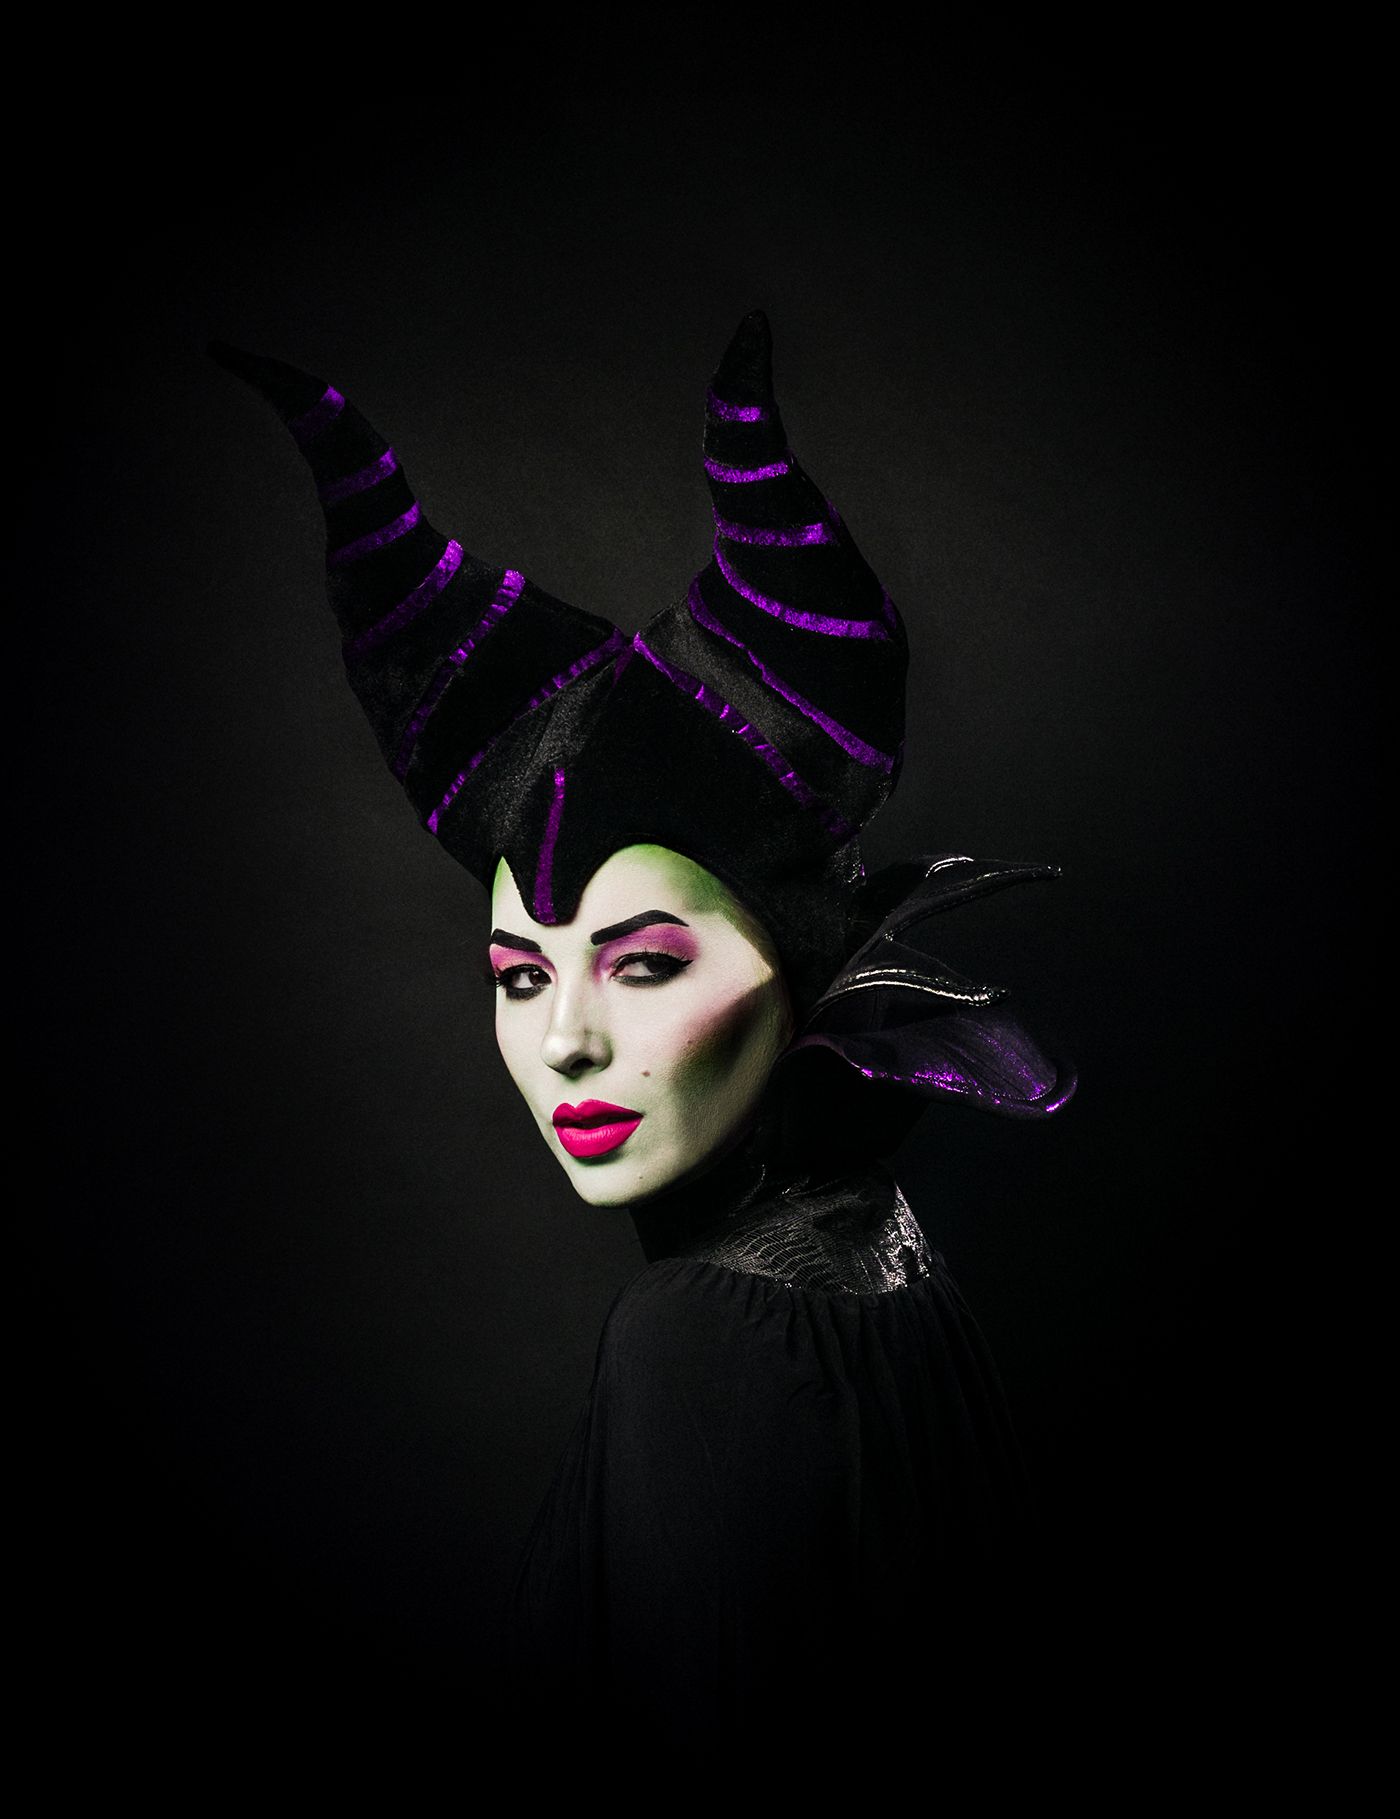 17 Diy Disney Villain Costumes - Female Villain Costume Ideas